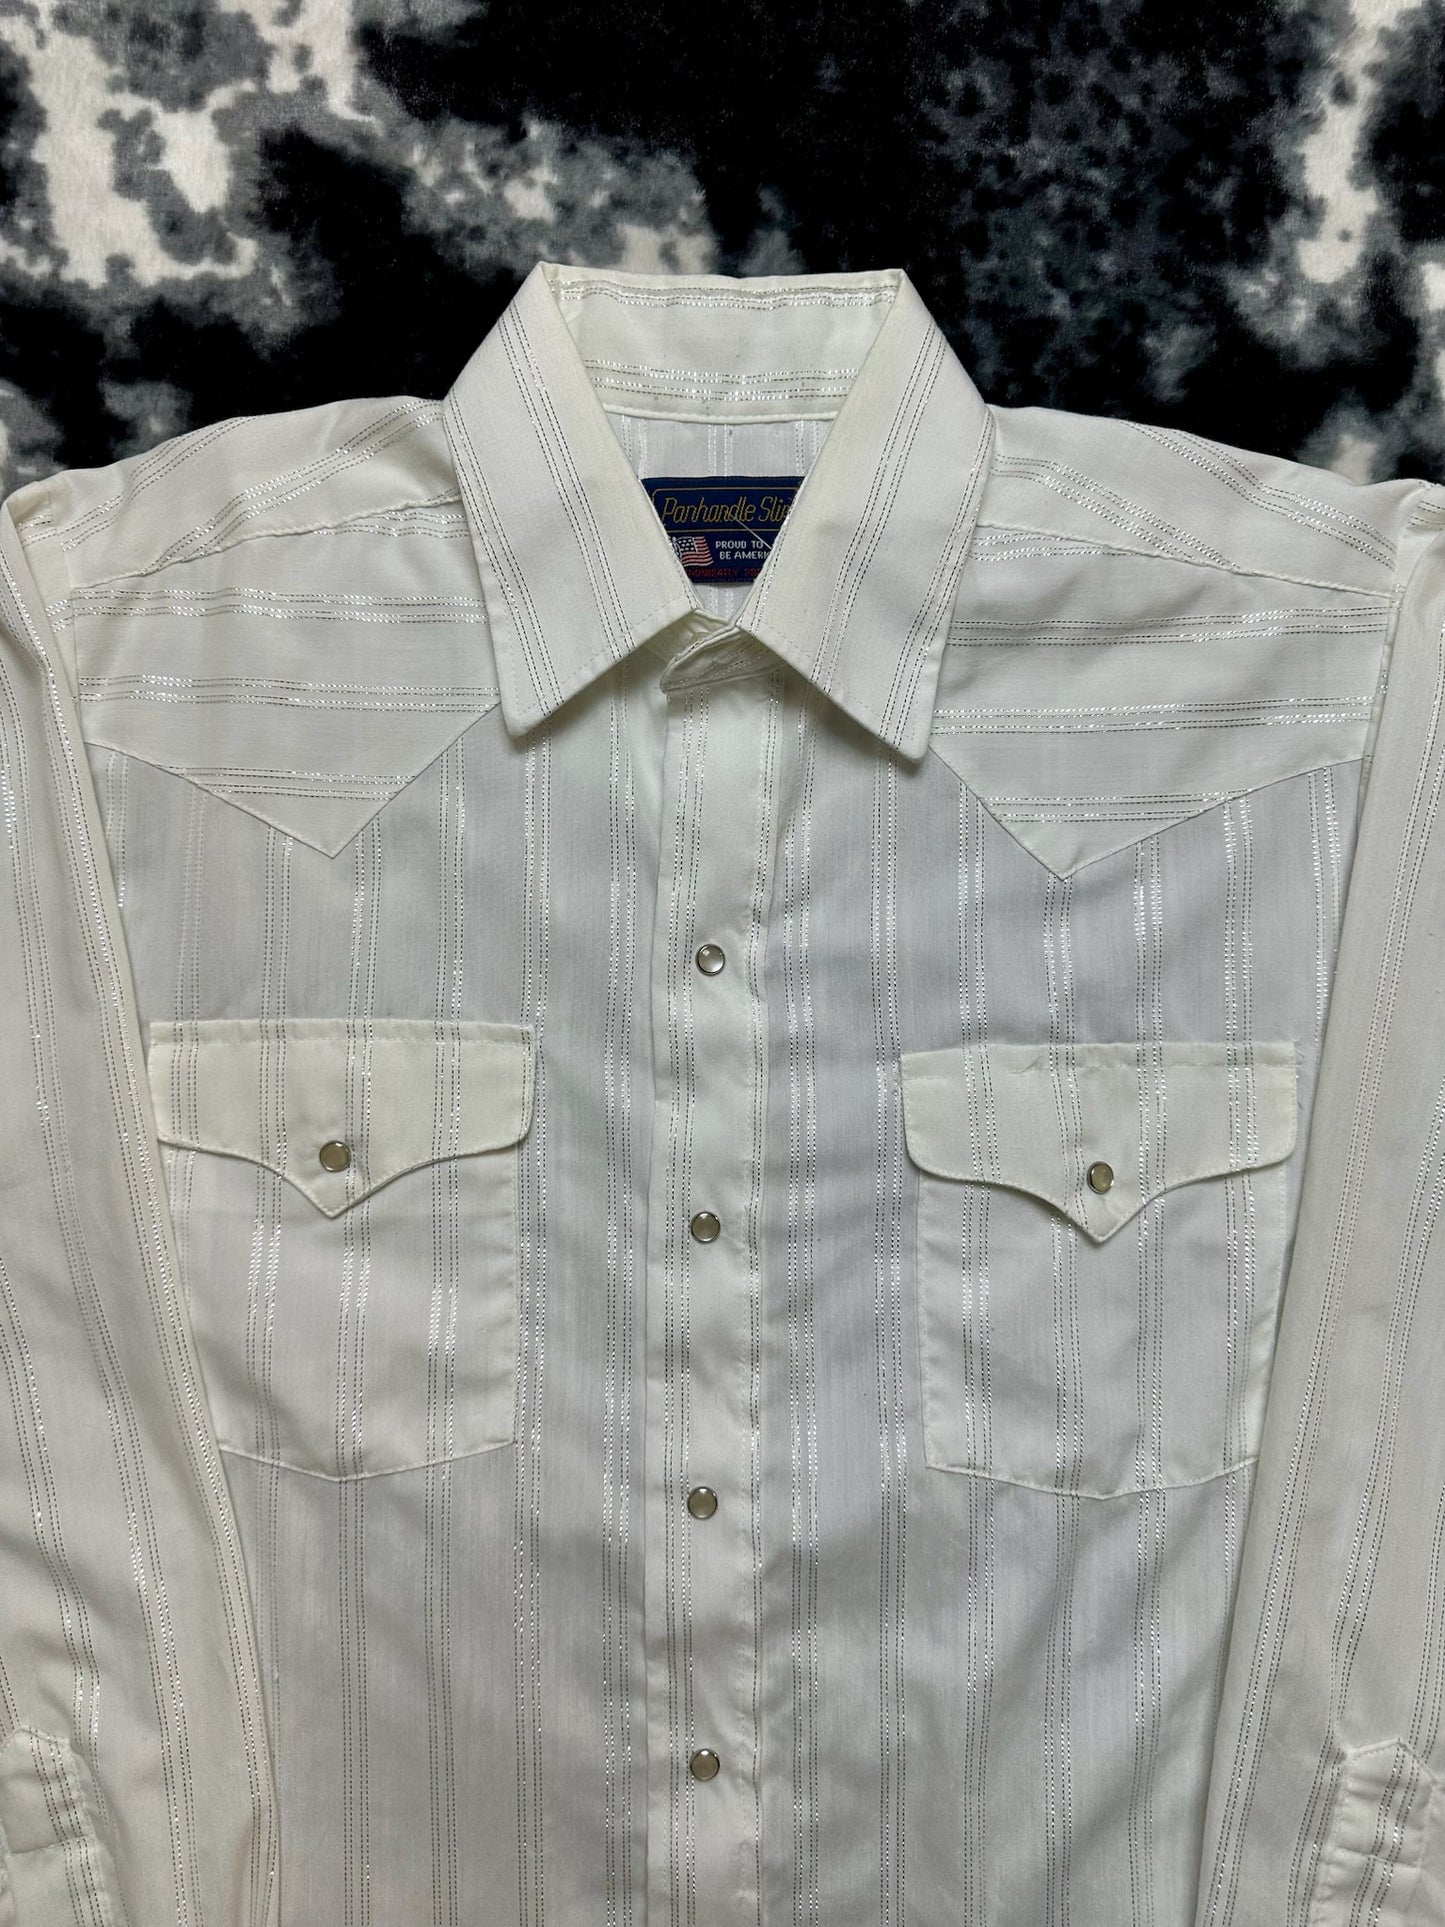 Panhandle Slim White & Silver Striped Pearl Snap Shirt (M)